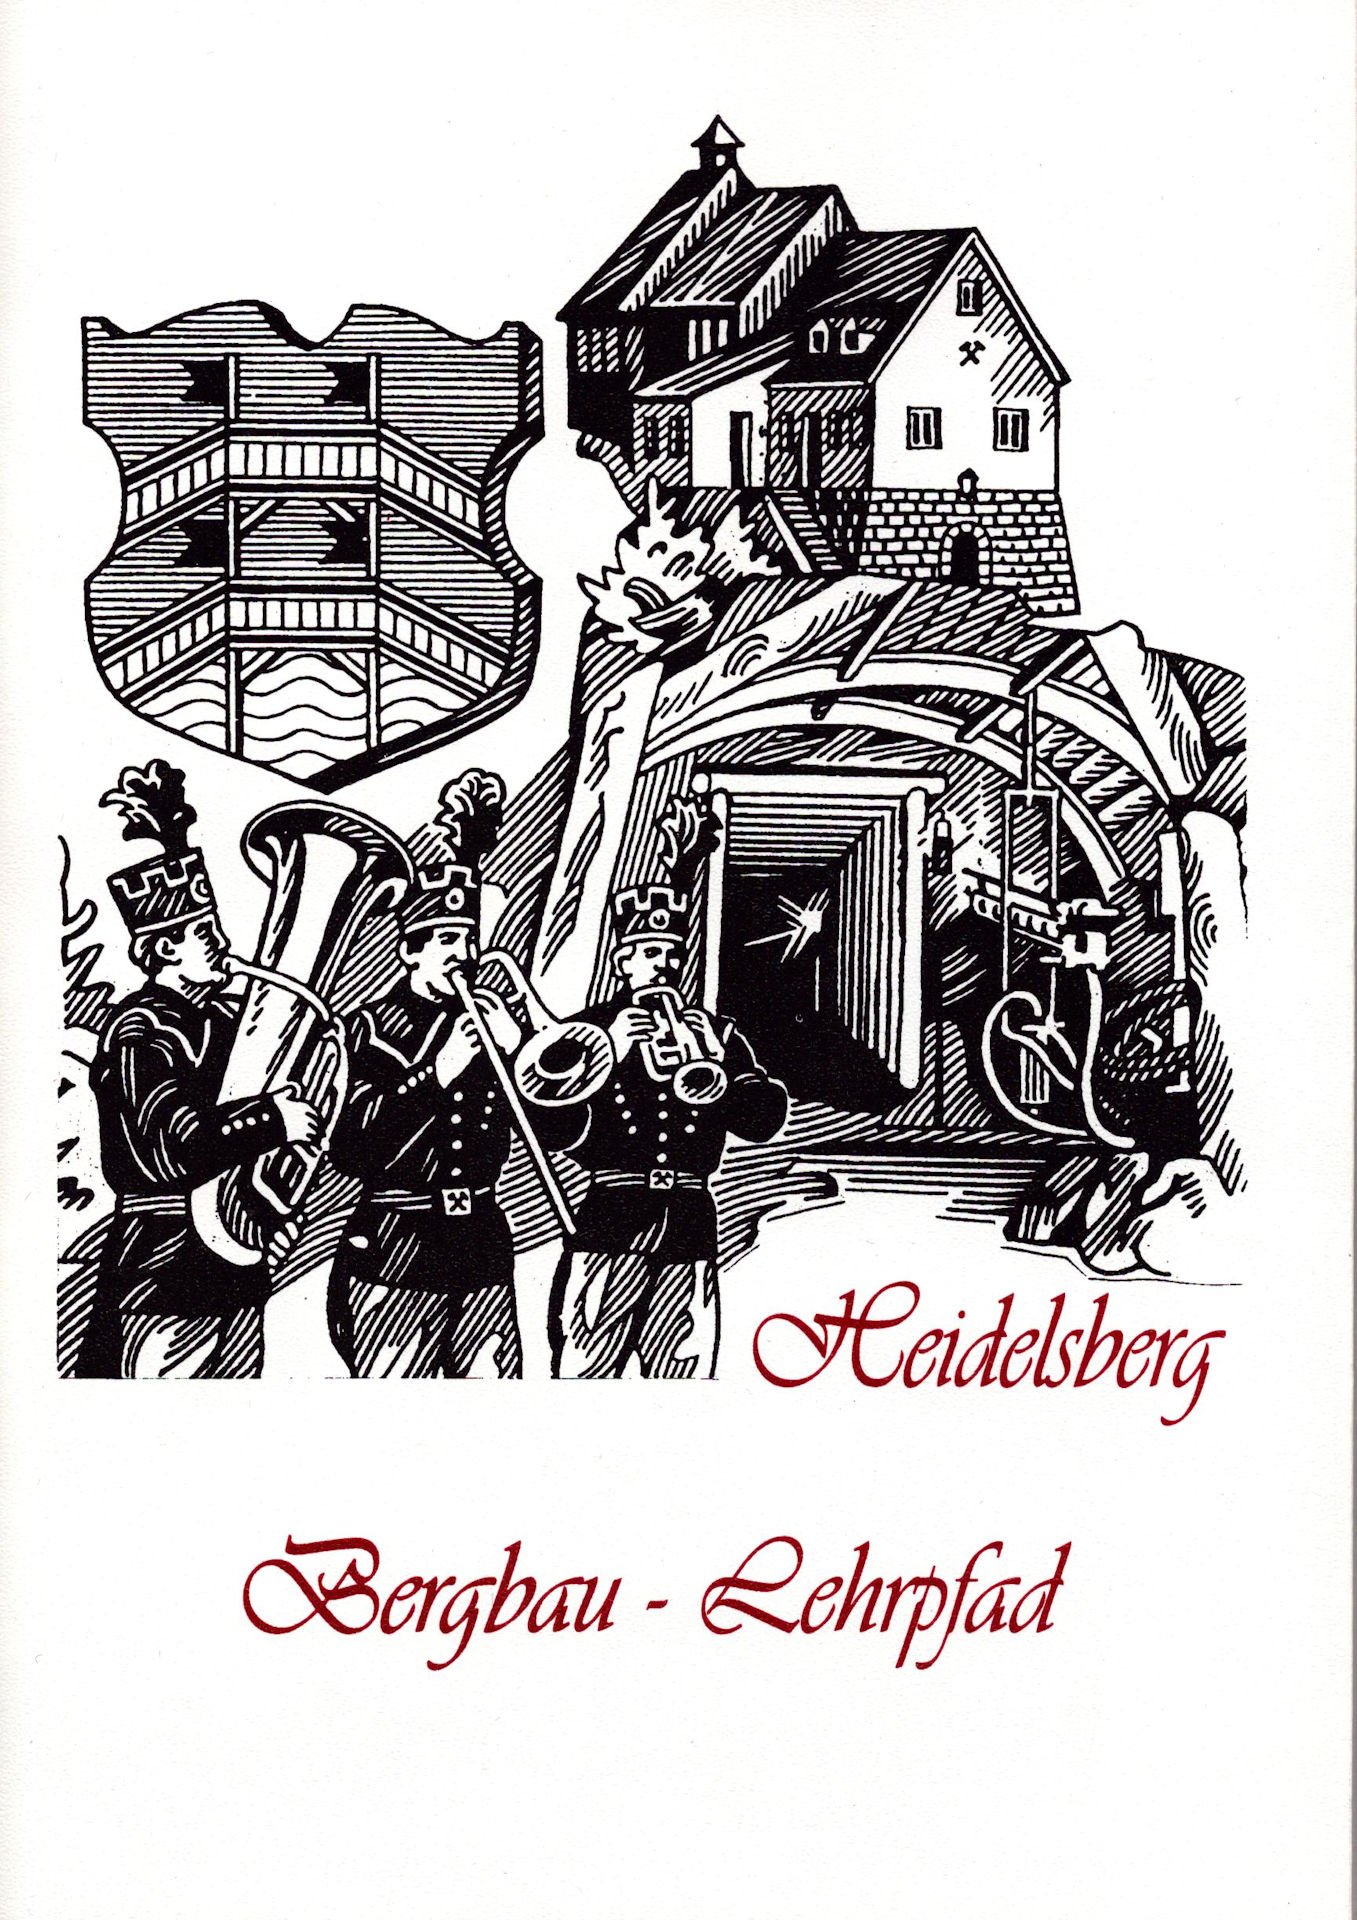 Originaltitel: Heidelsberg
Bergbau-Lehrpfad (Saxonia-Freiberg-Stiftung CC BY-NC-SA)